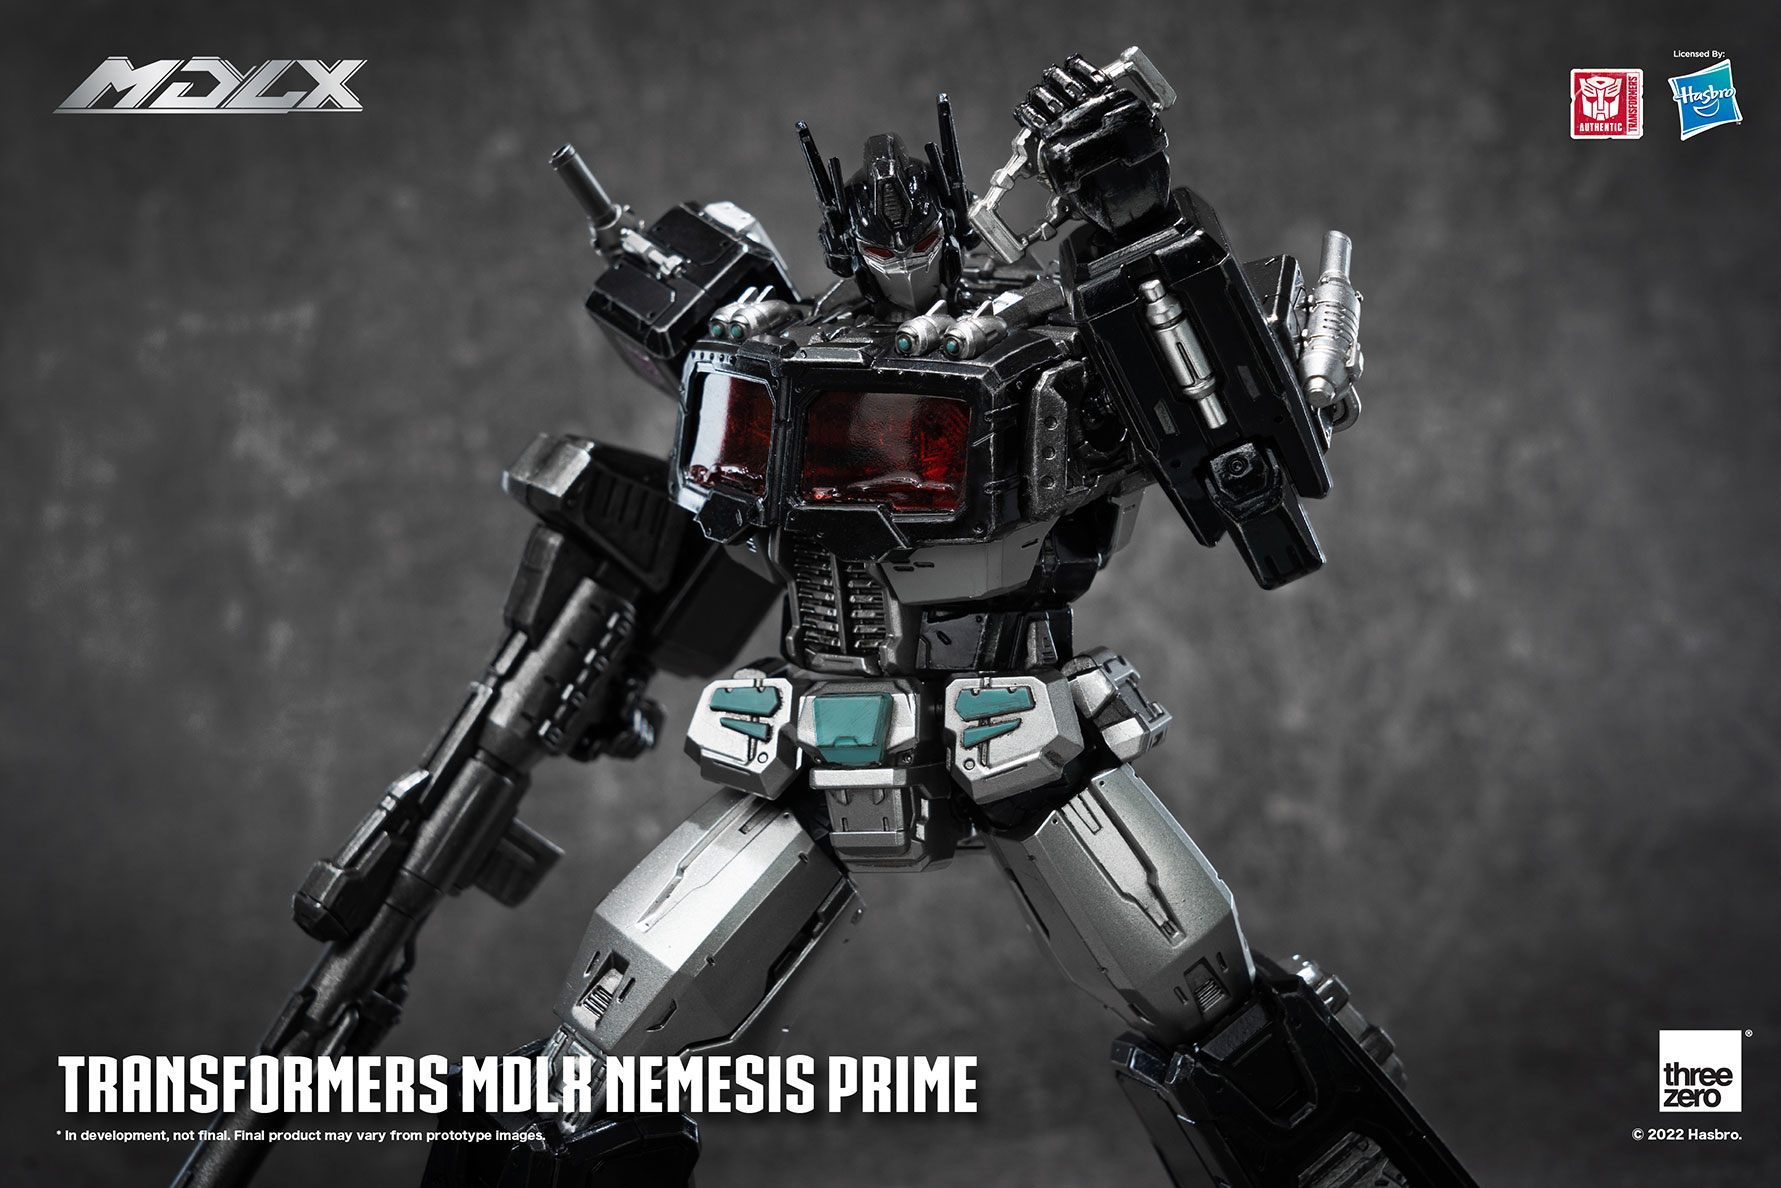 frame_Transformers-MDLX-Nemesis-Prime-11.jpg